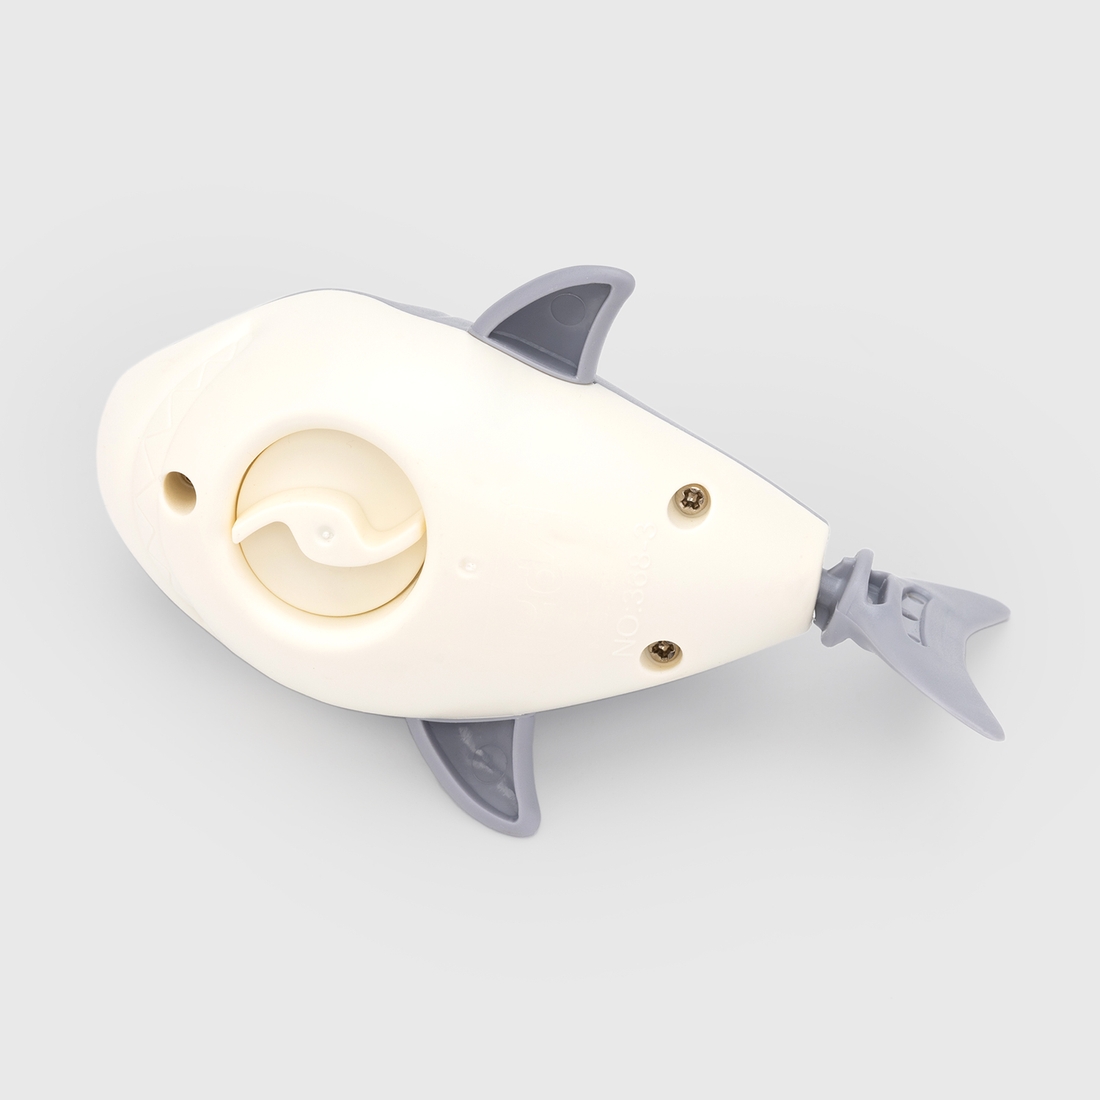 Фото Водоплавающая игрушка "Акула" 368-3 Серый (2000990111944)